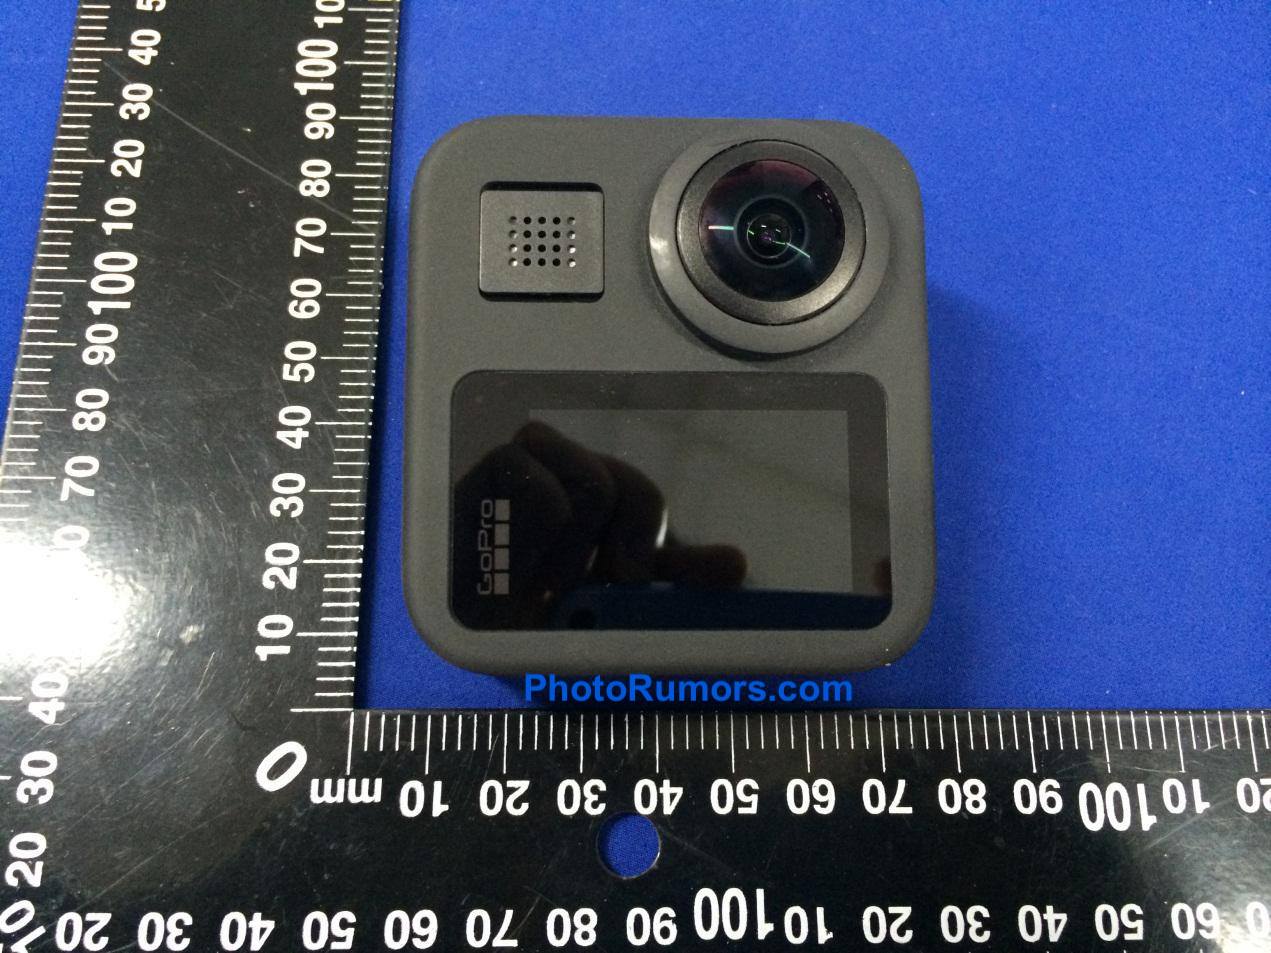 GoPro Max camera leaked online - Photo Rumors